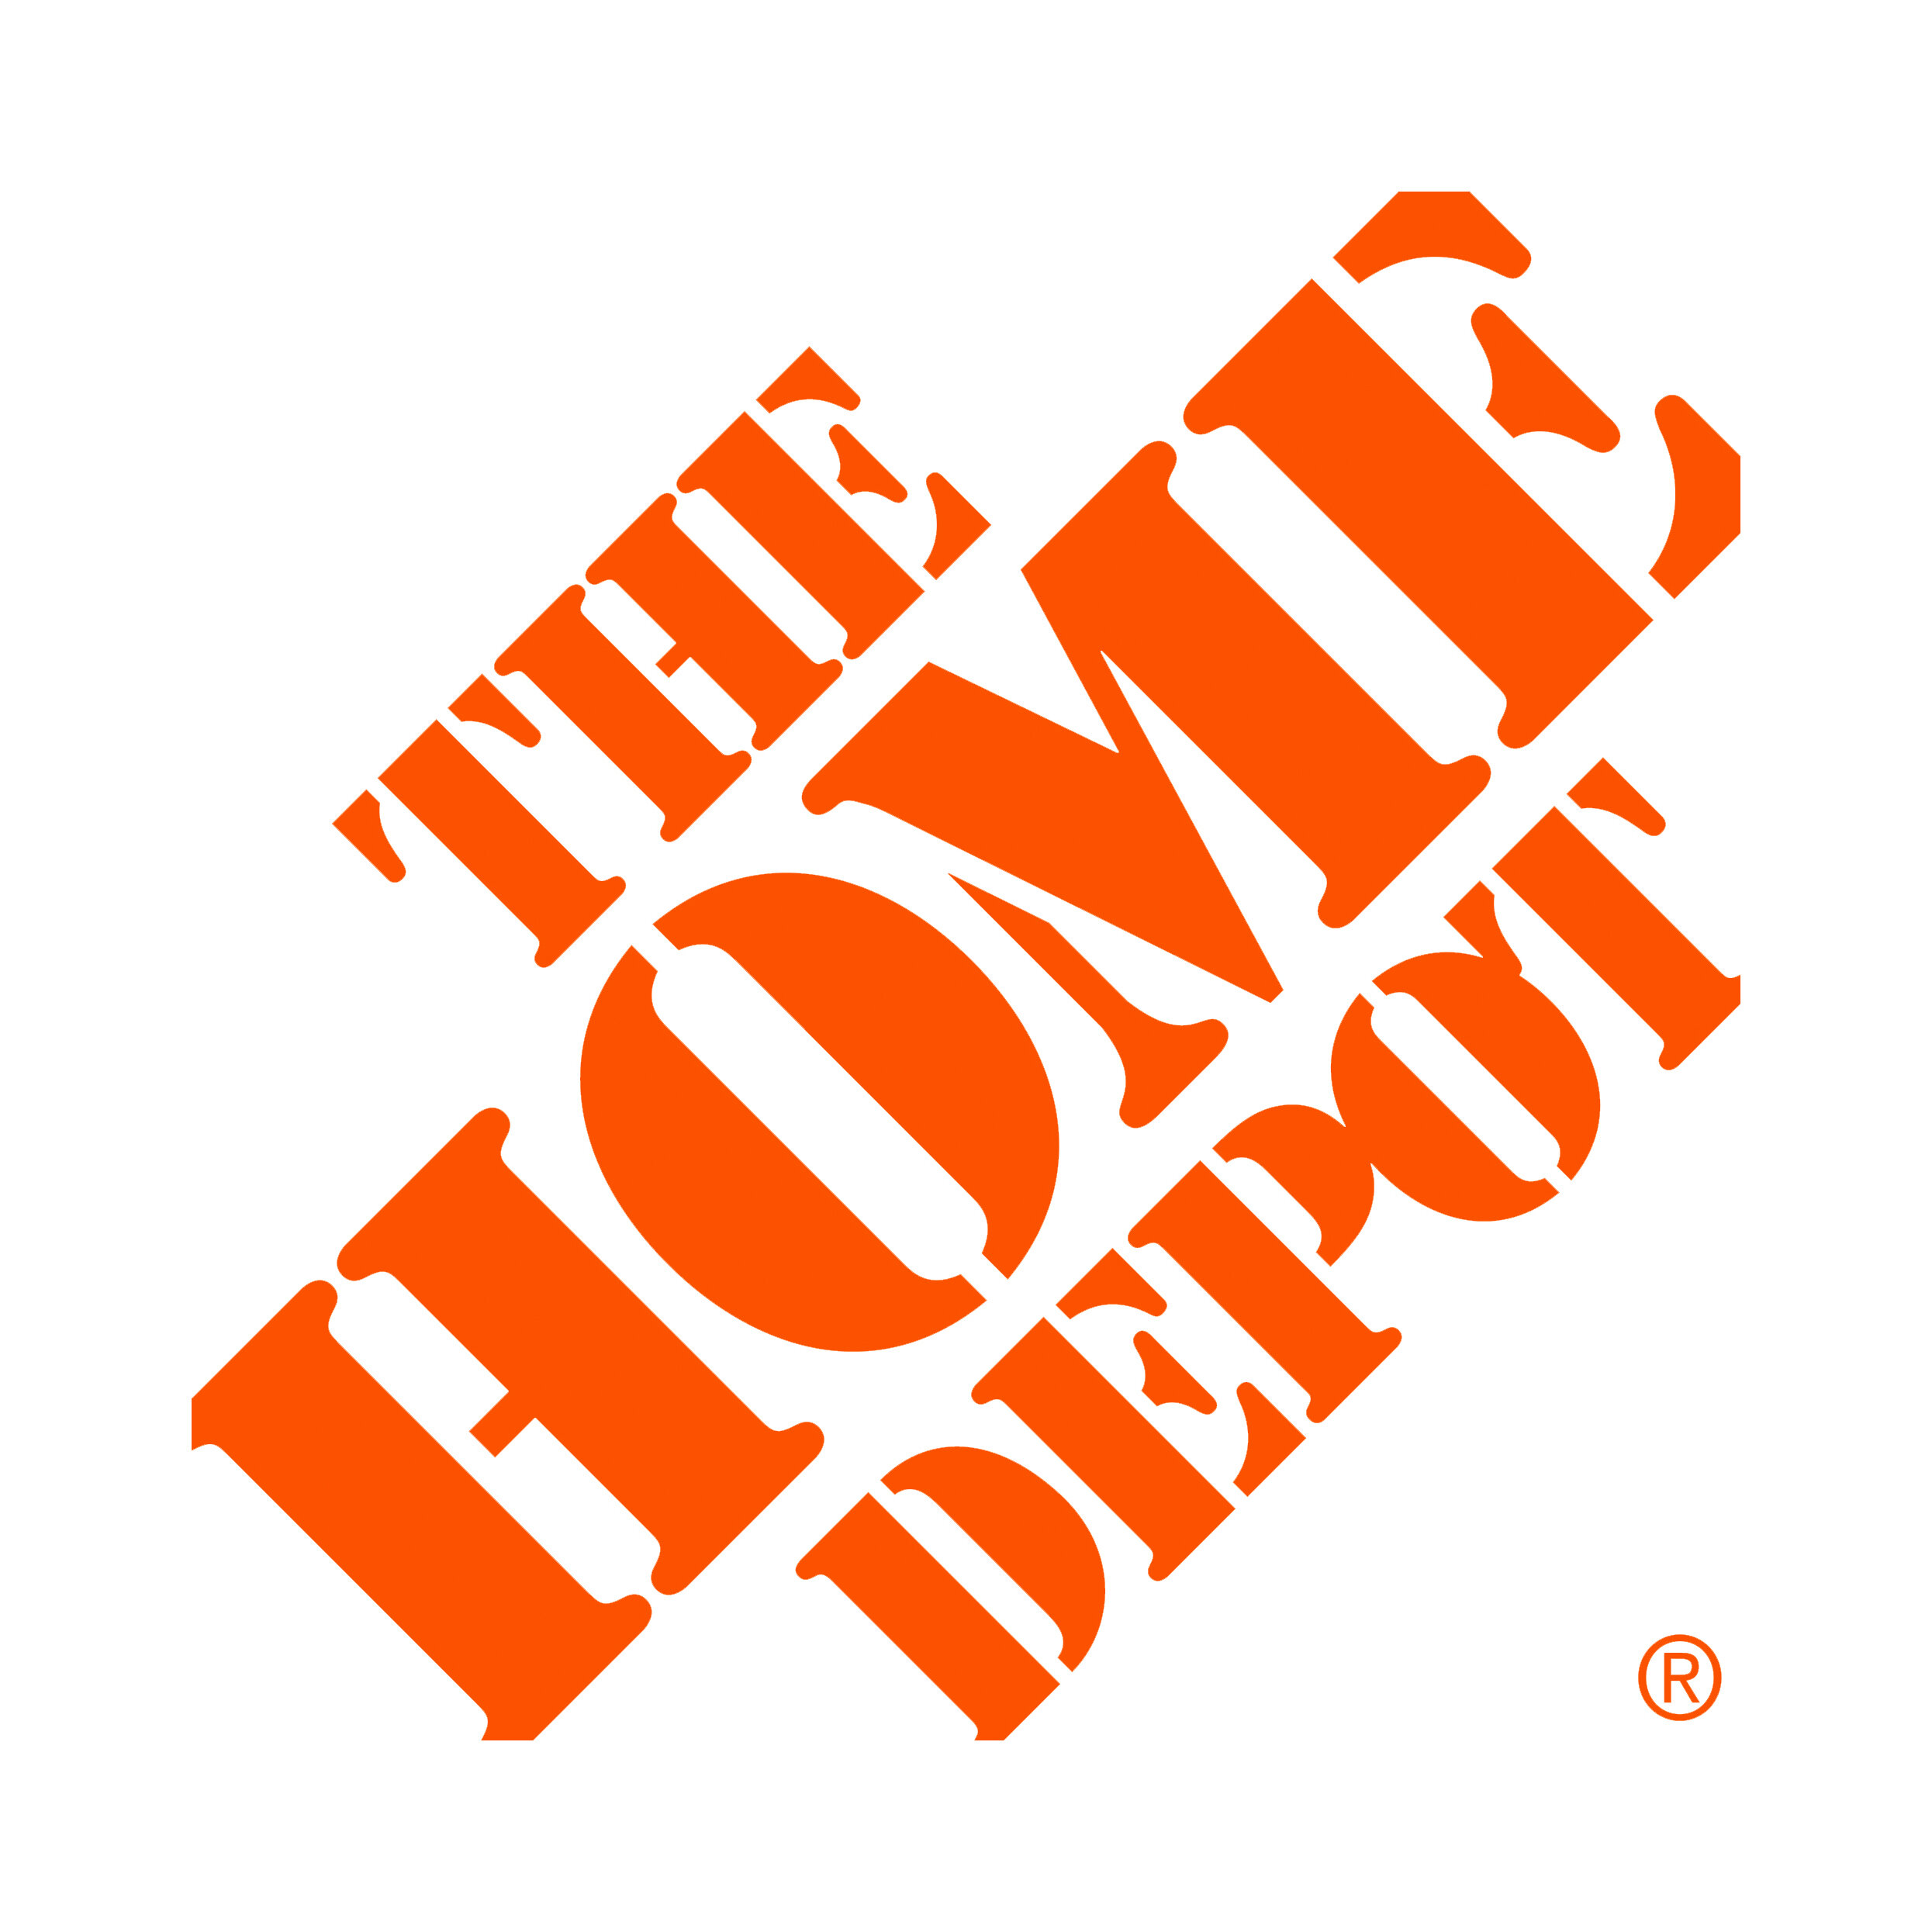 Home Depot logo.jpg